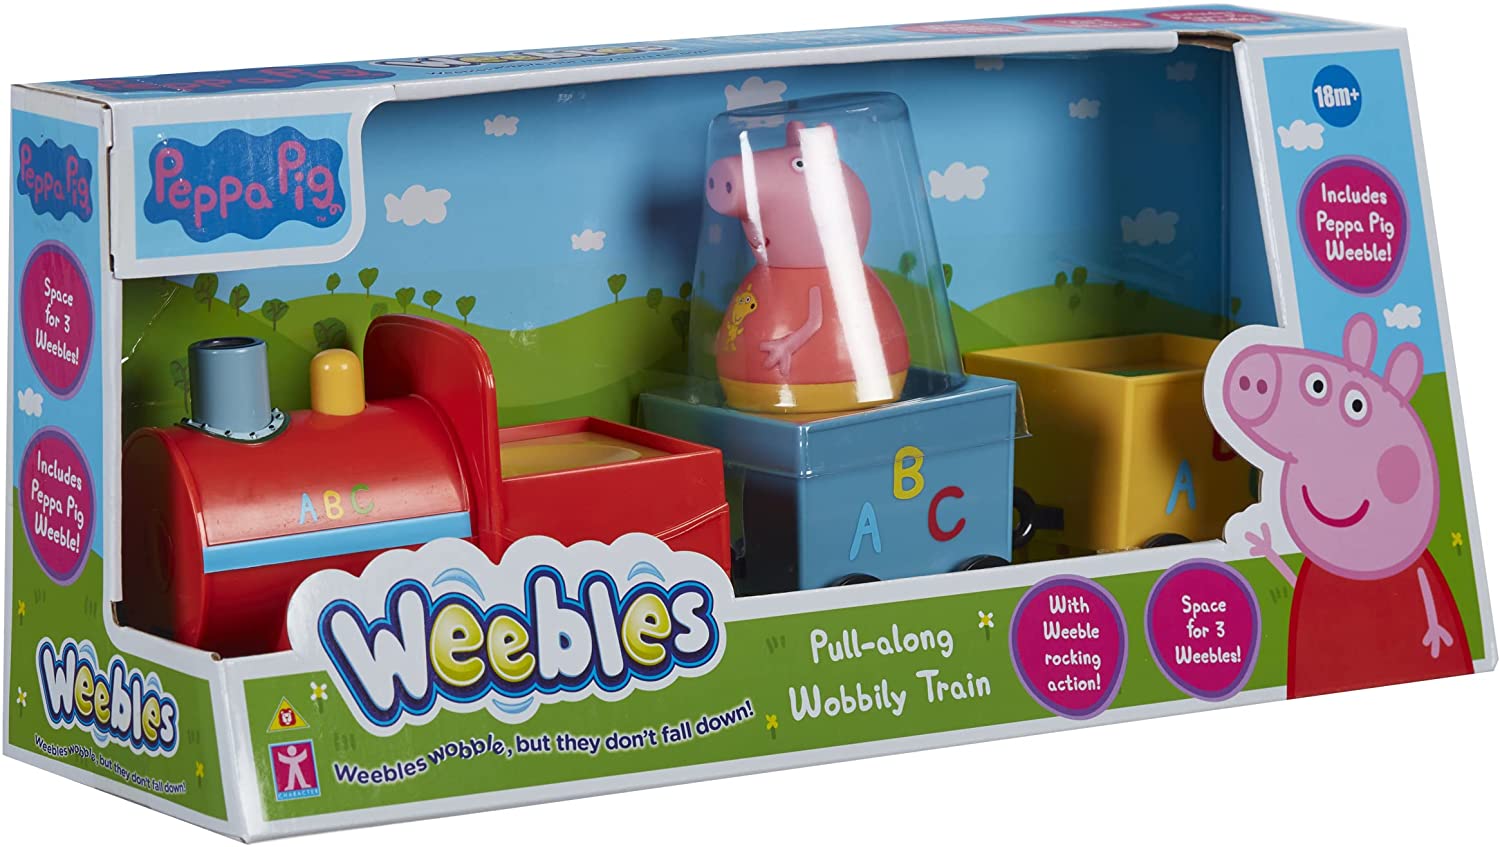 Peppa Pig - Weebles Pull-Along Wobbily Train